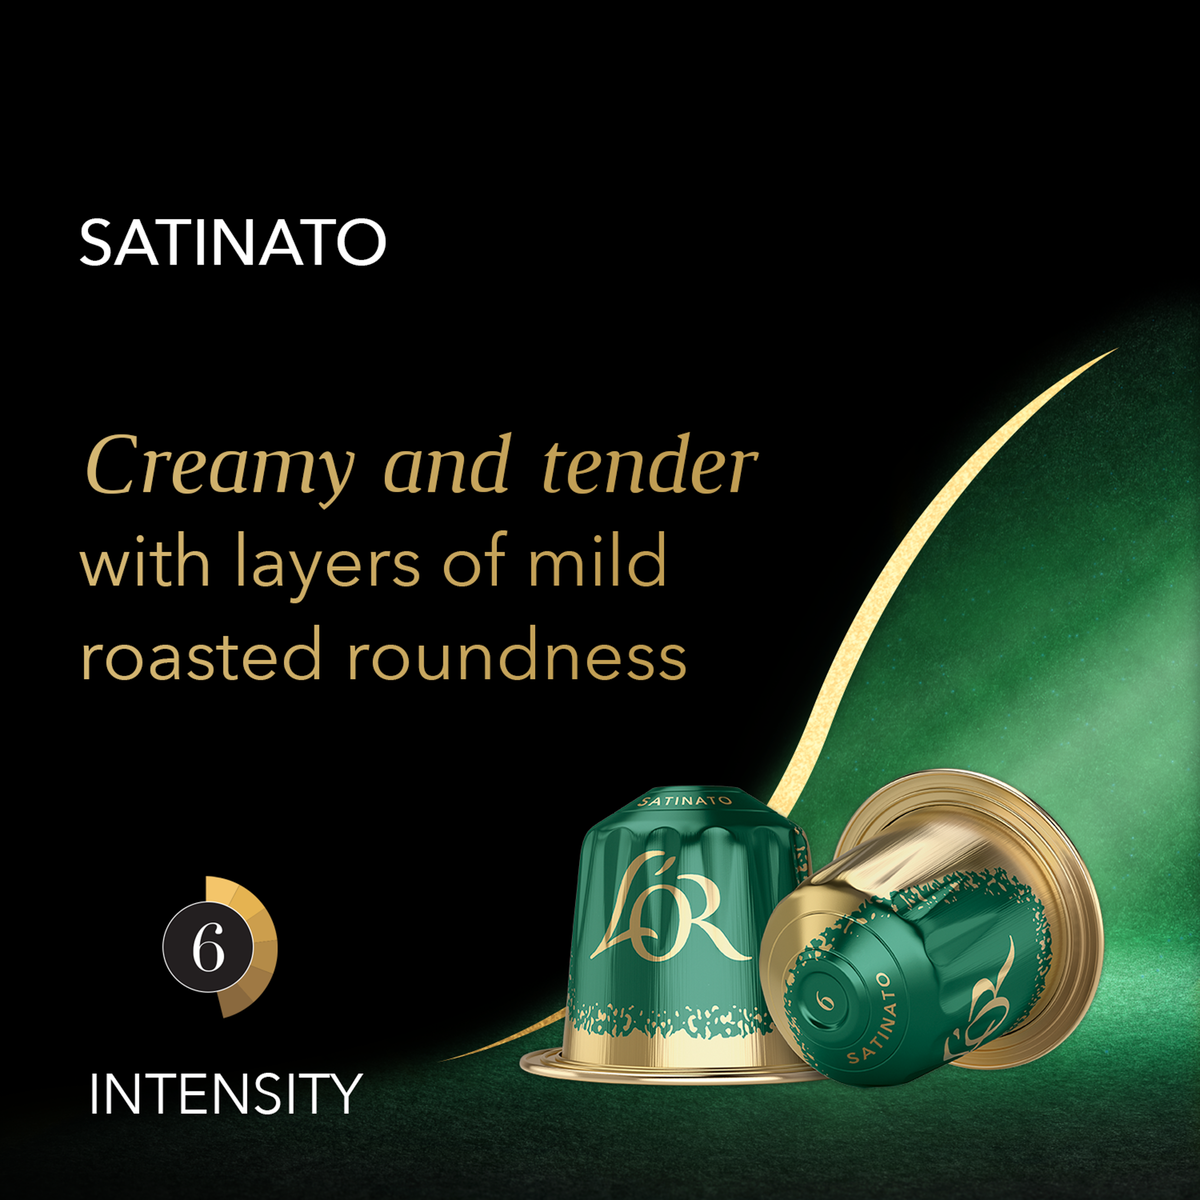 L'Or Espresso Satinato Intensity 6 Coffee Capsules 10 pcs